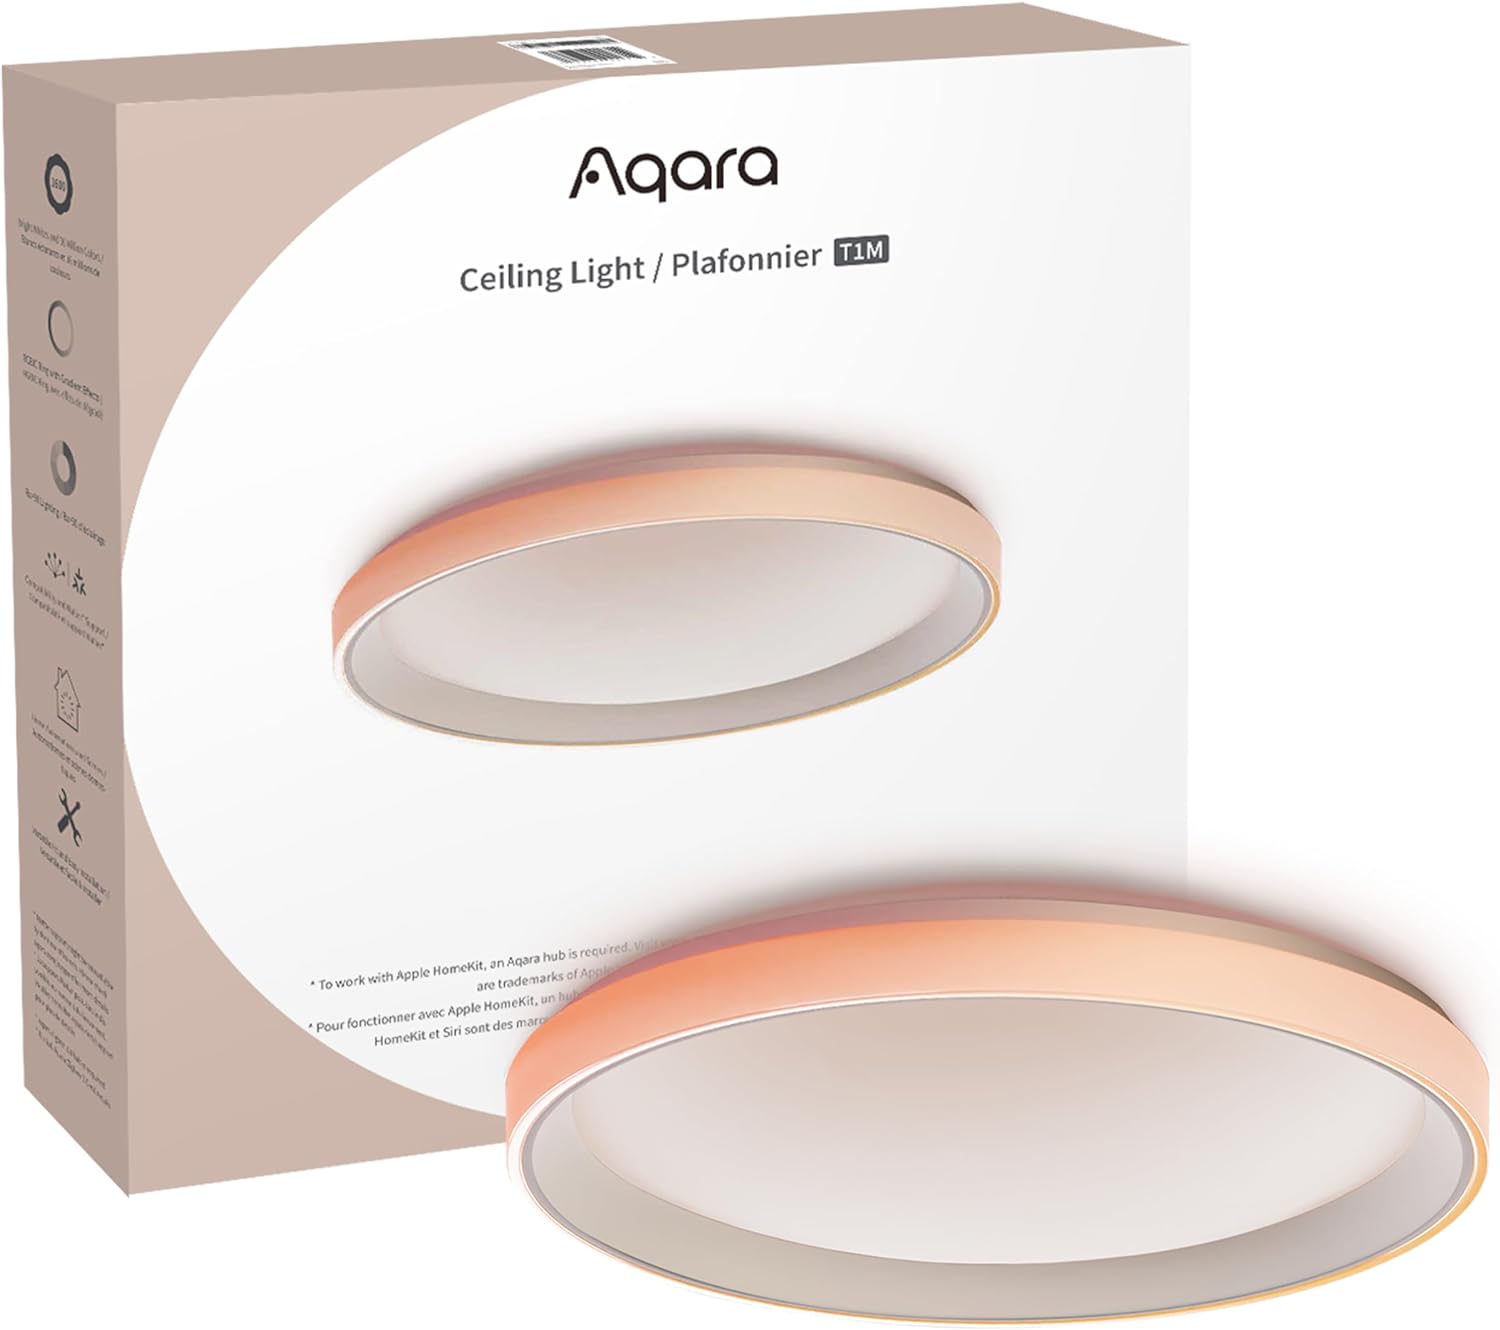 Aqara ceiling light product box